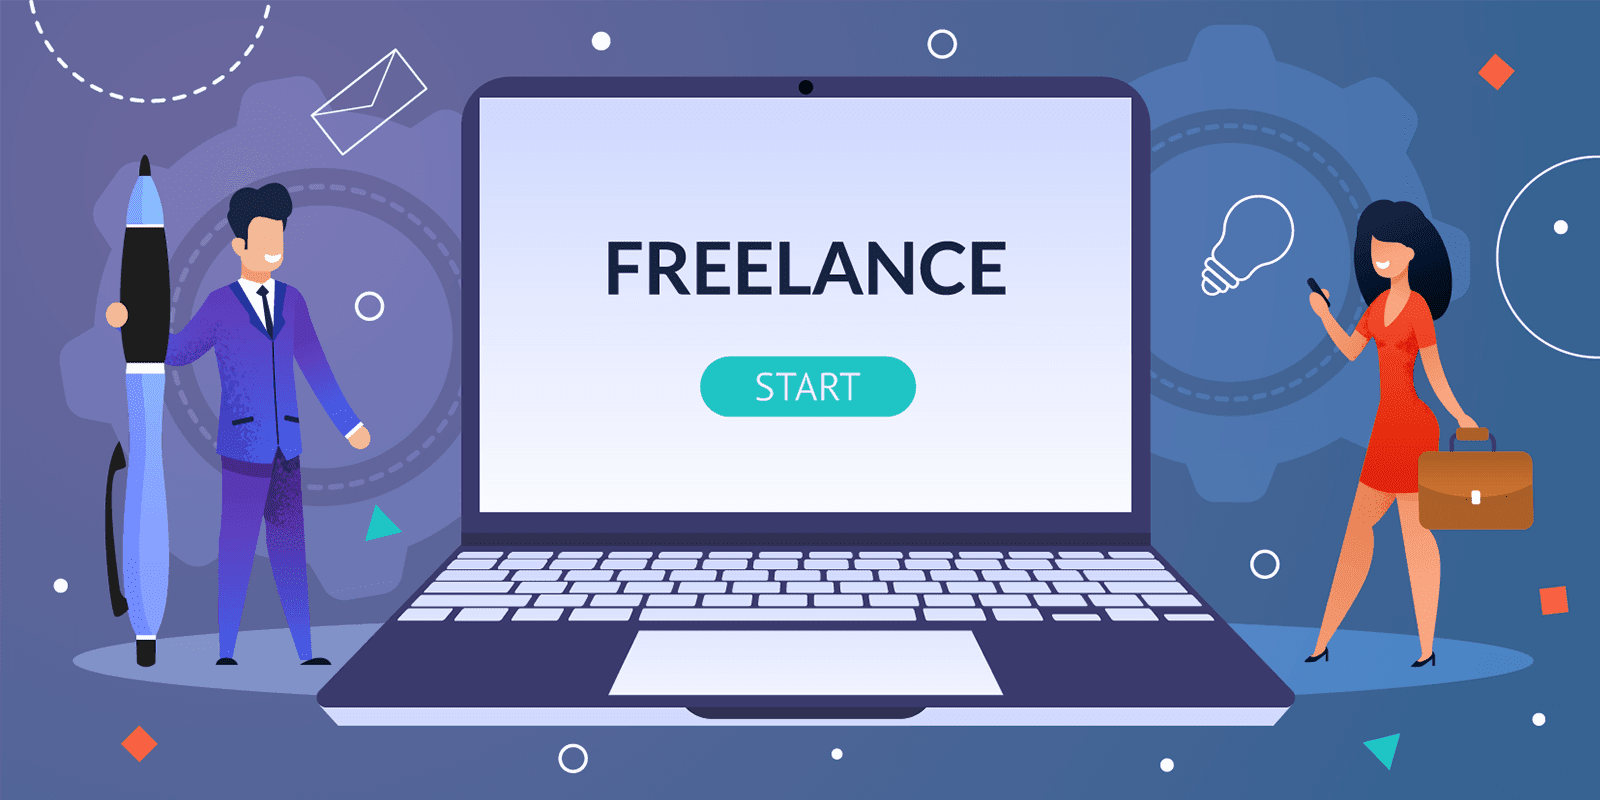 Top 5 Websites for Freelance Opportunities in Online Earning